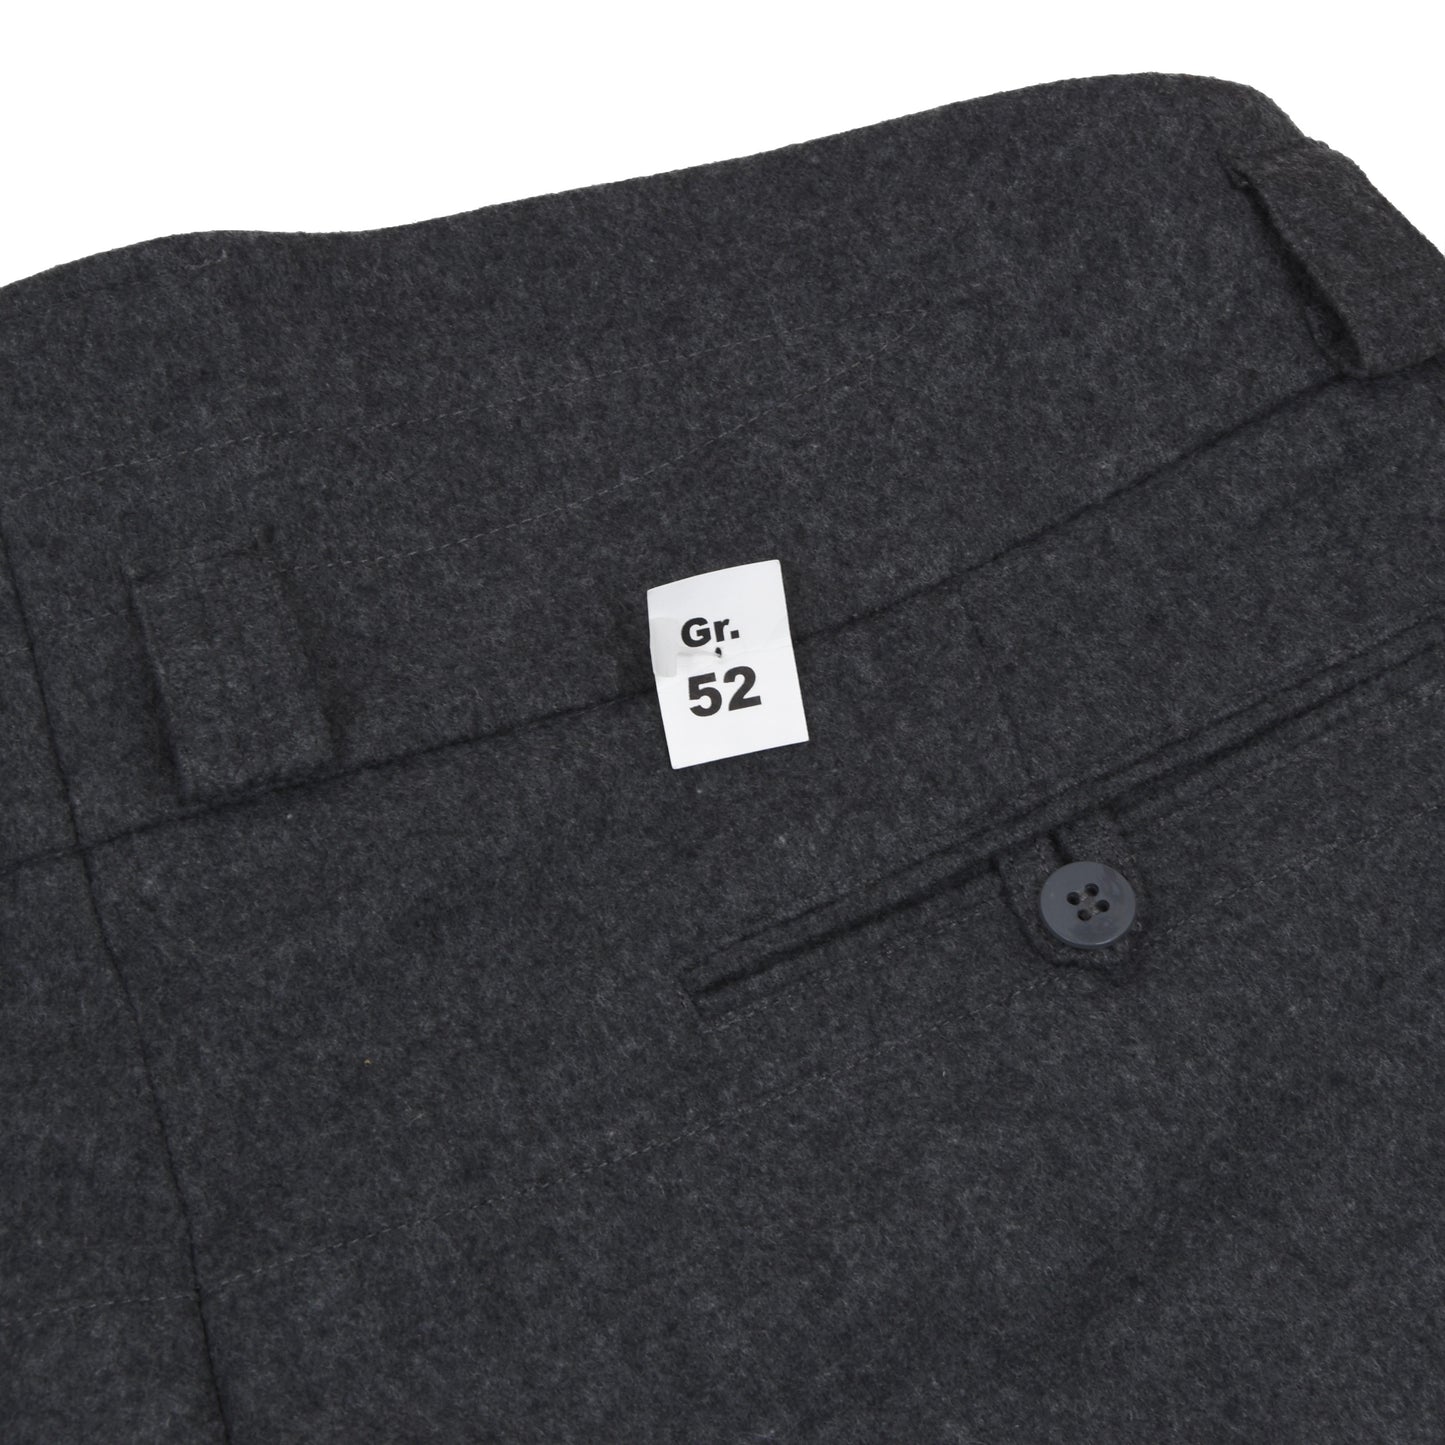 NWOT Orig. Dachstein Wool Knickerbockers/Breeks Size 52 - Grey